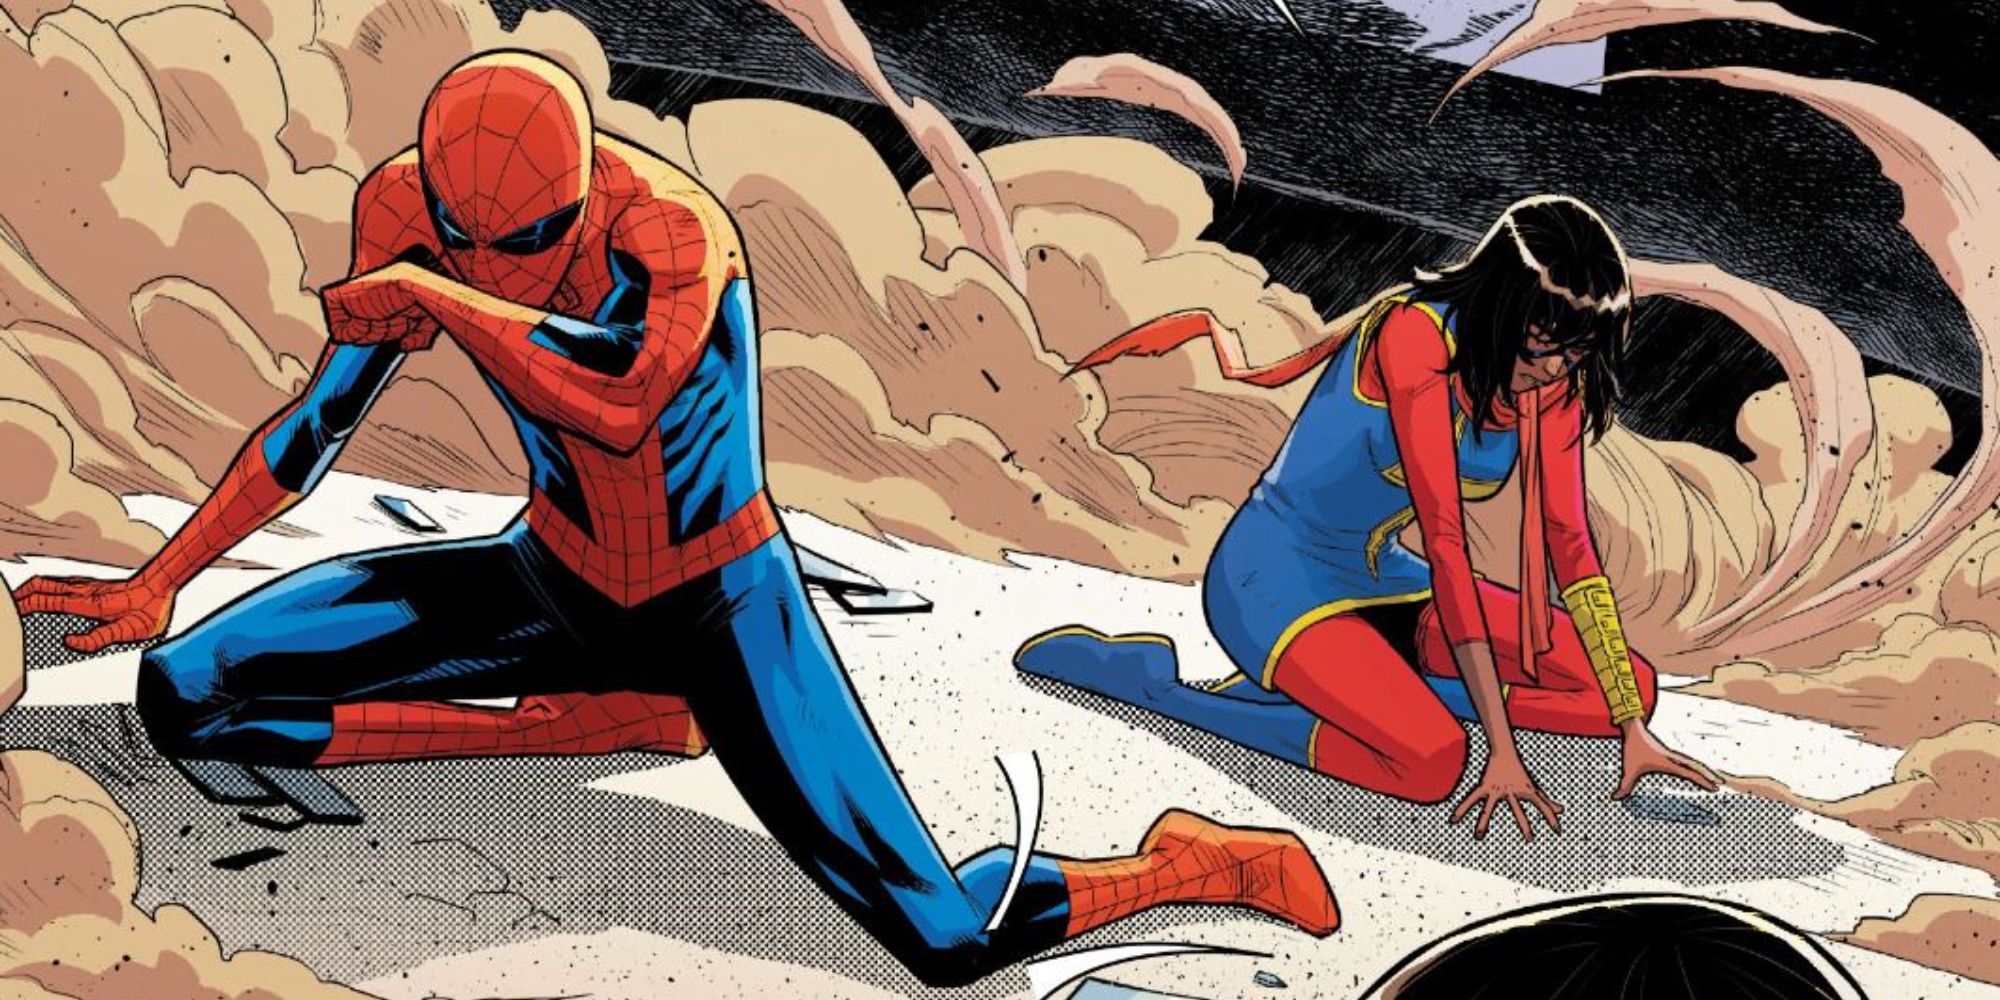 Spider-Man and Kamala Khan on the ground